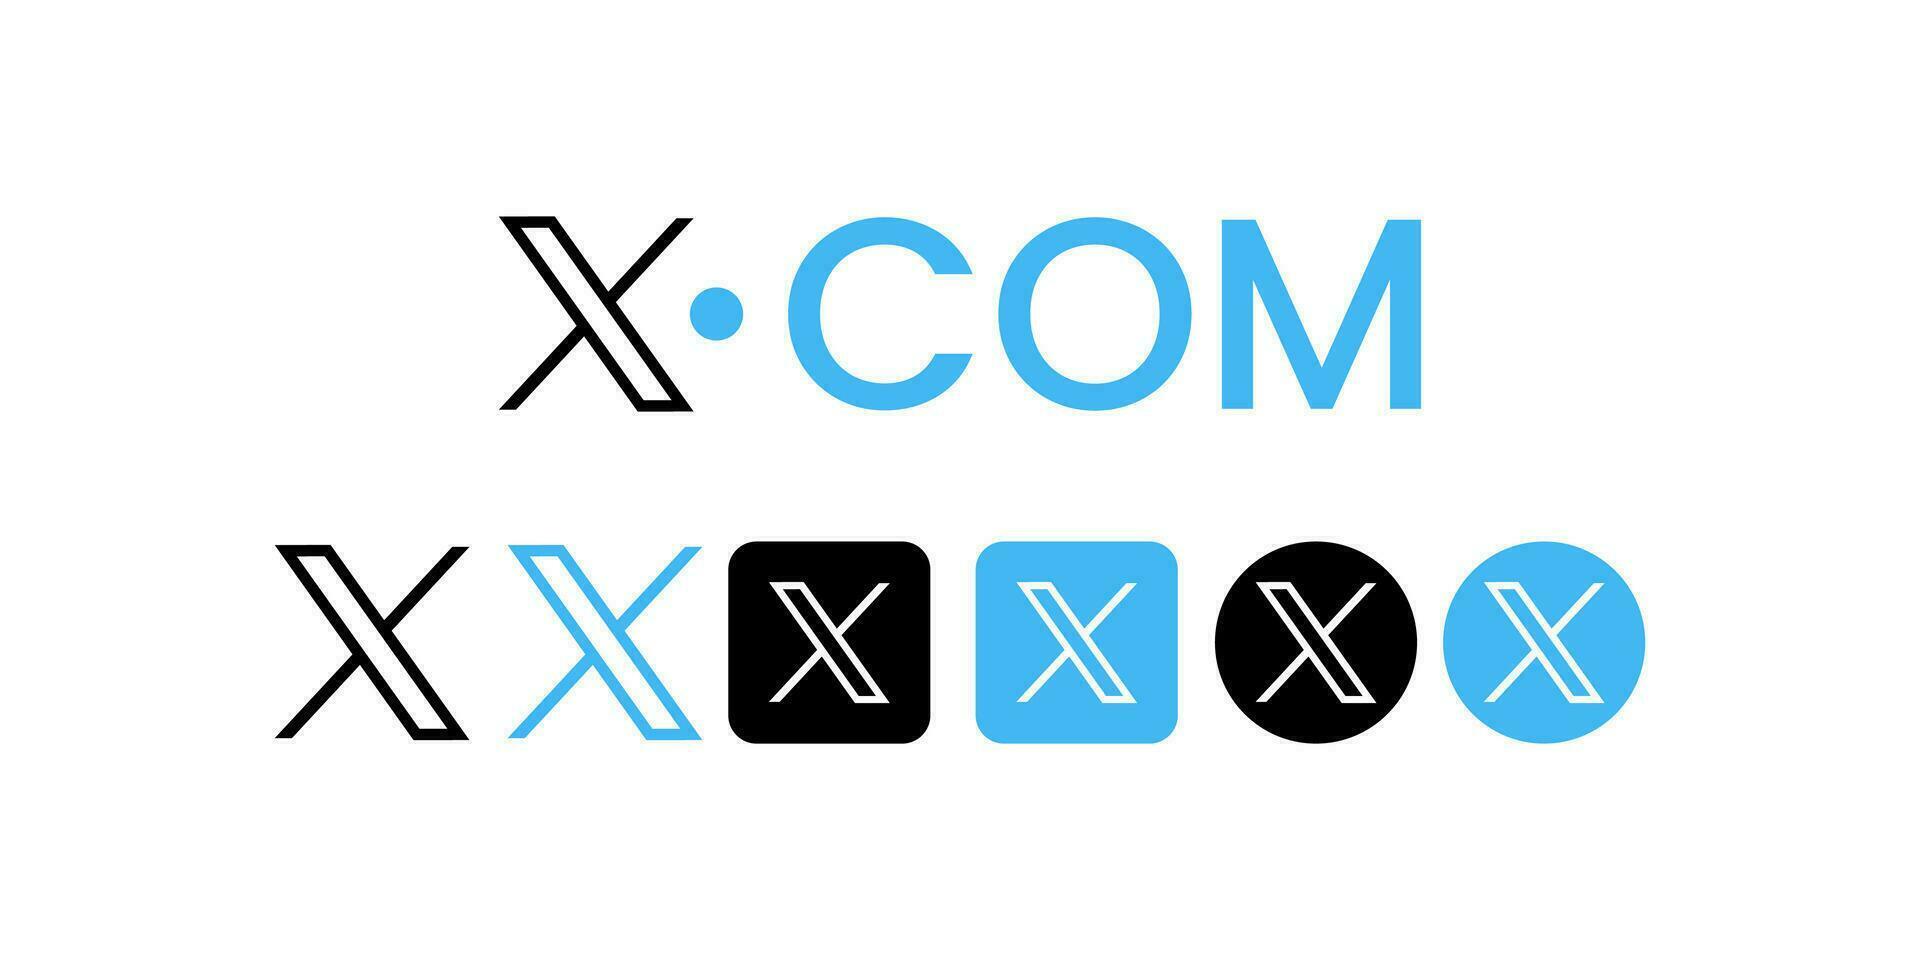 nuevo gorjeo x.com. gorjeo nuevo logo . gorjeo iconos.twitter X logo. editorial vector. vector